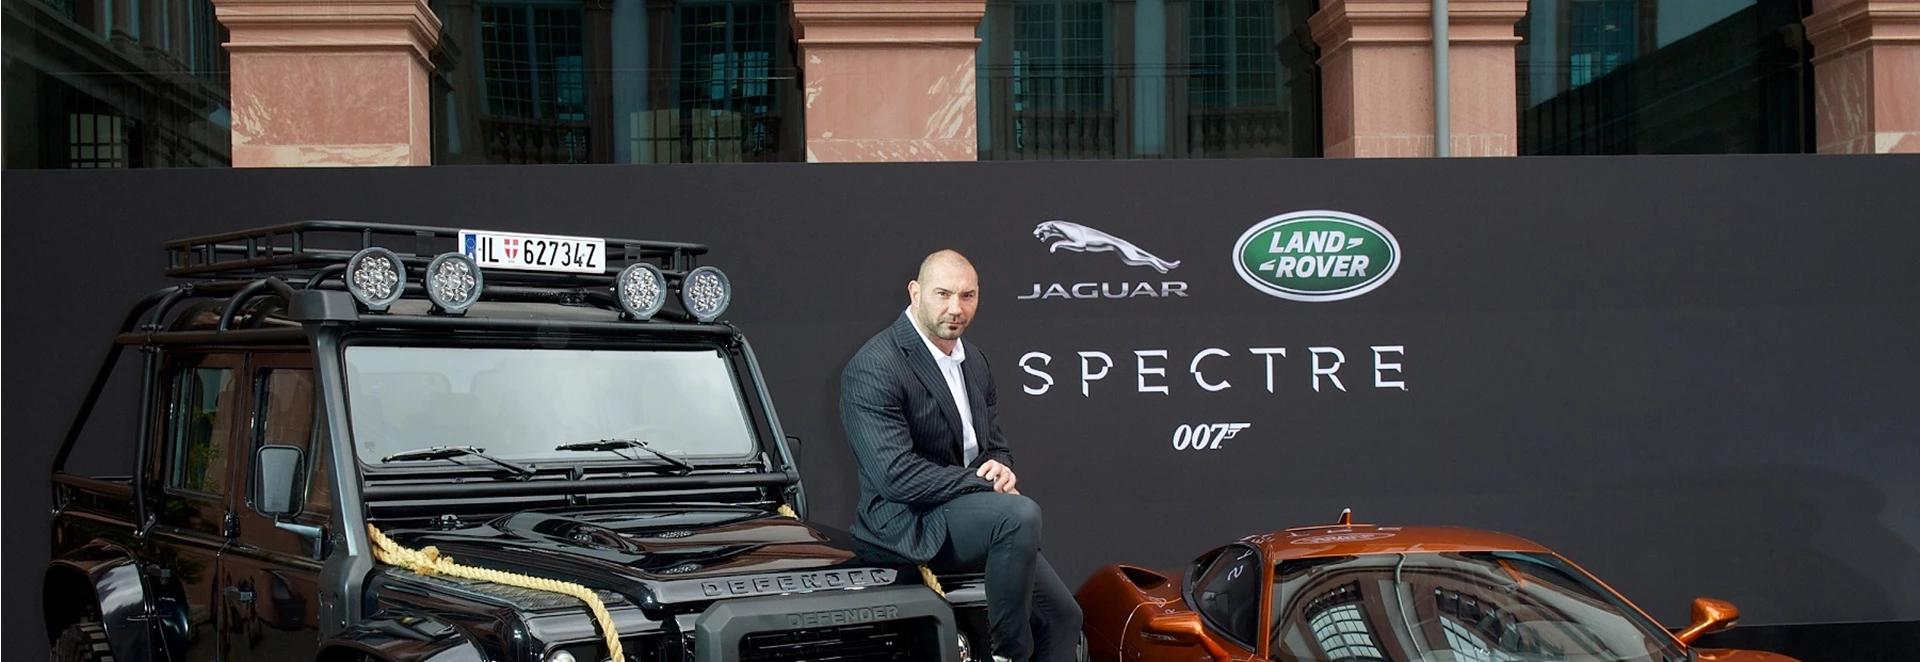 New James Bond Spectre vehicles make Frankfurt debut